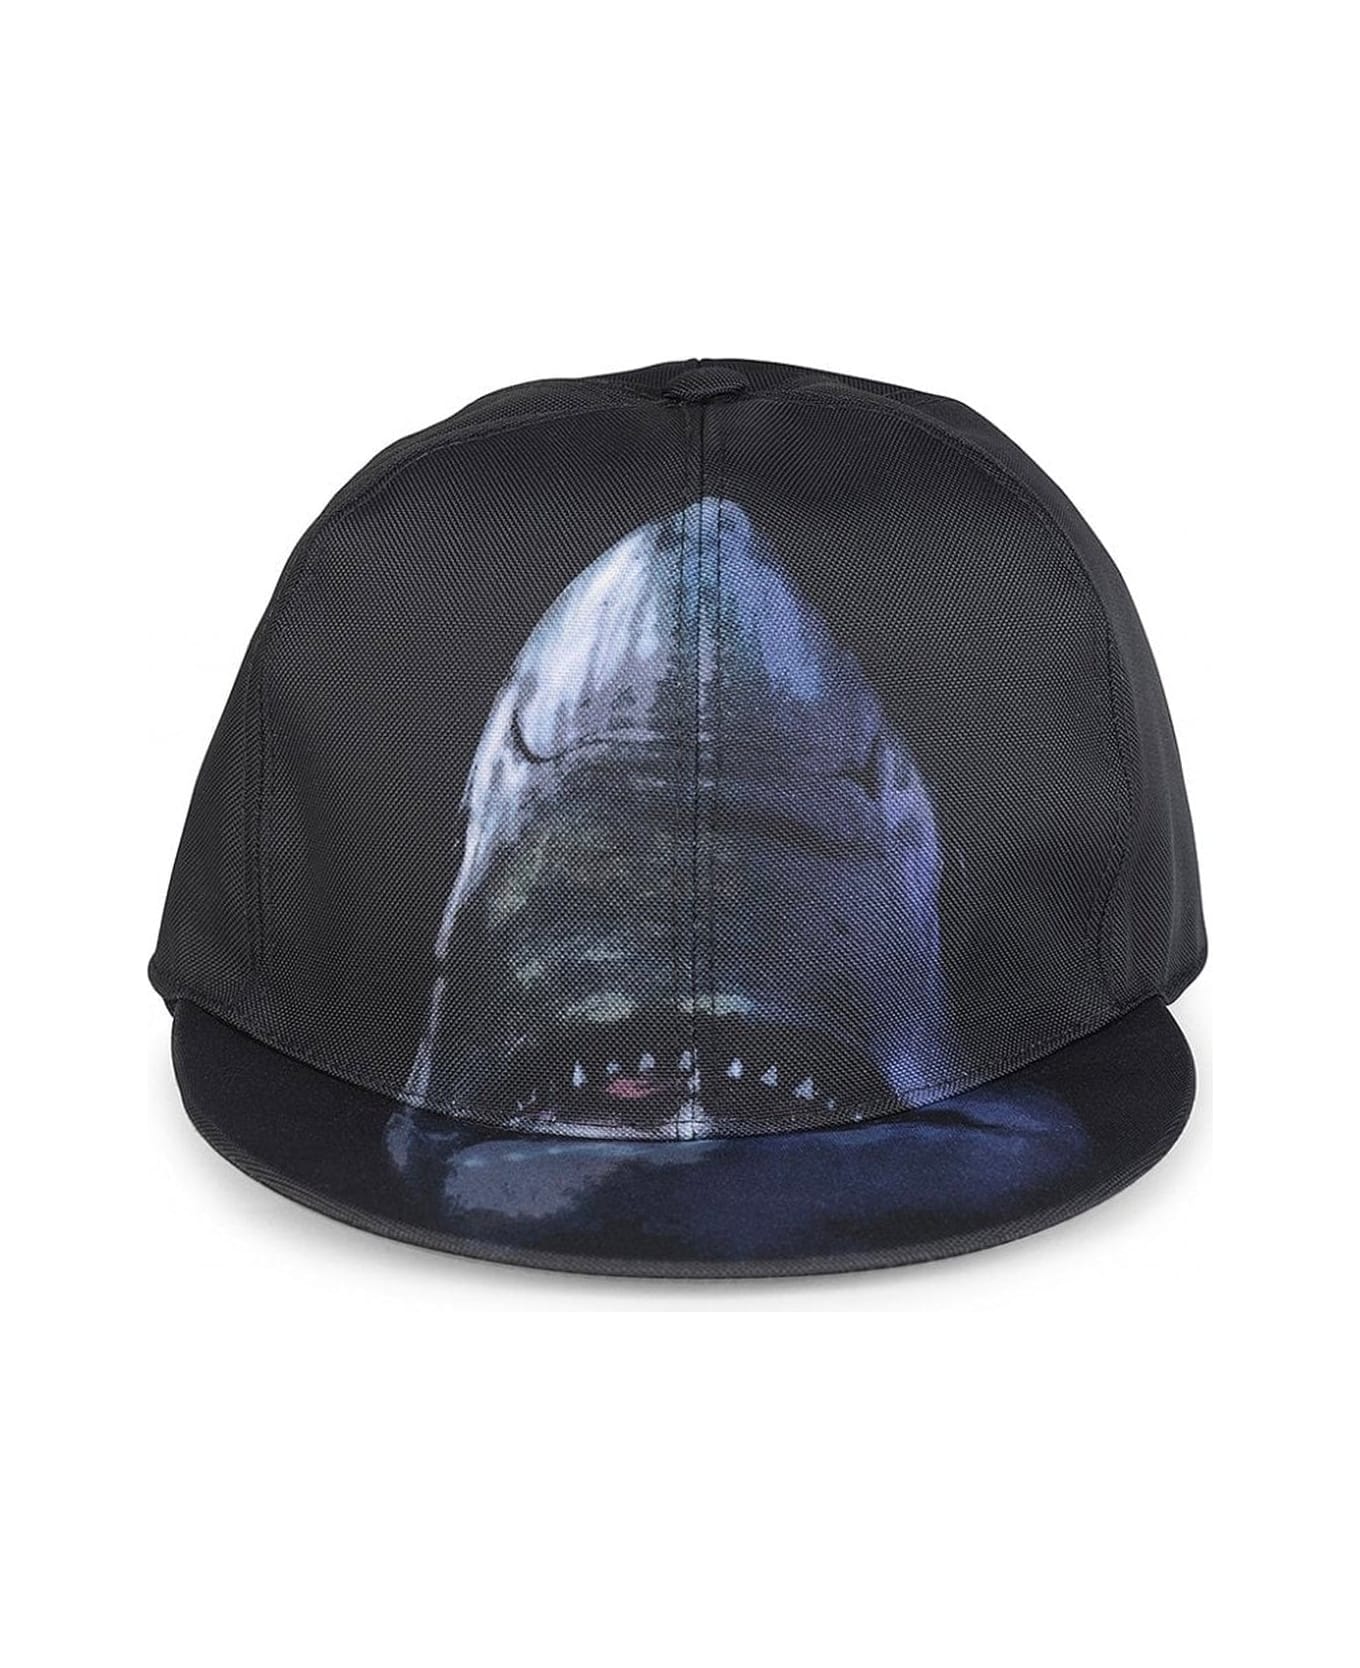 Givenchy Shark Print Cap - Black